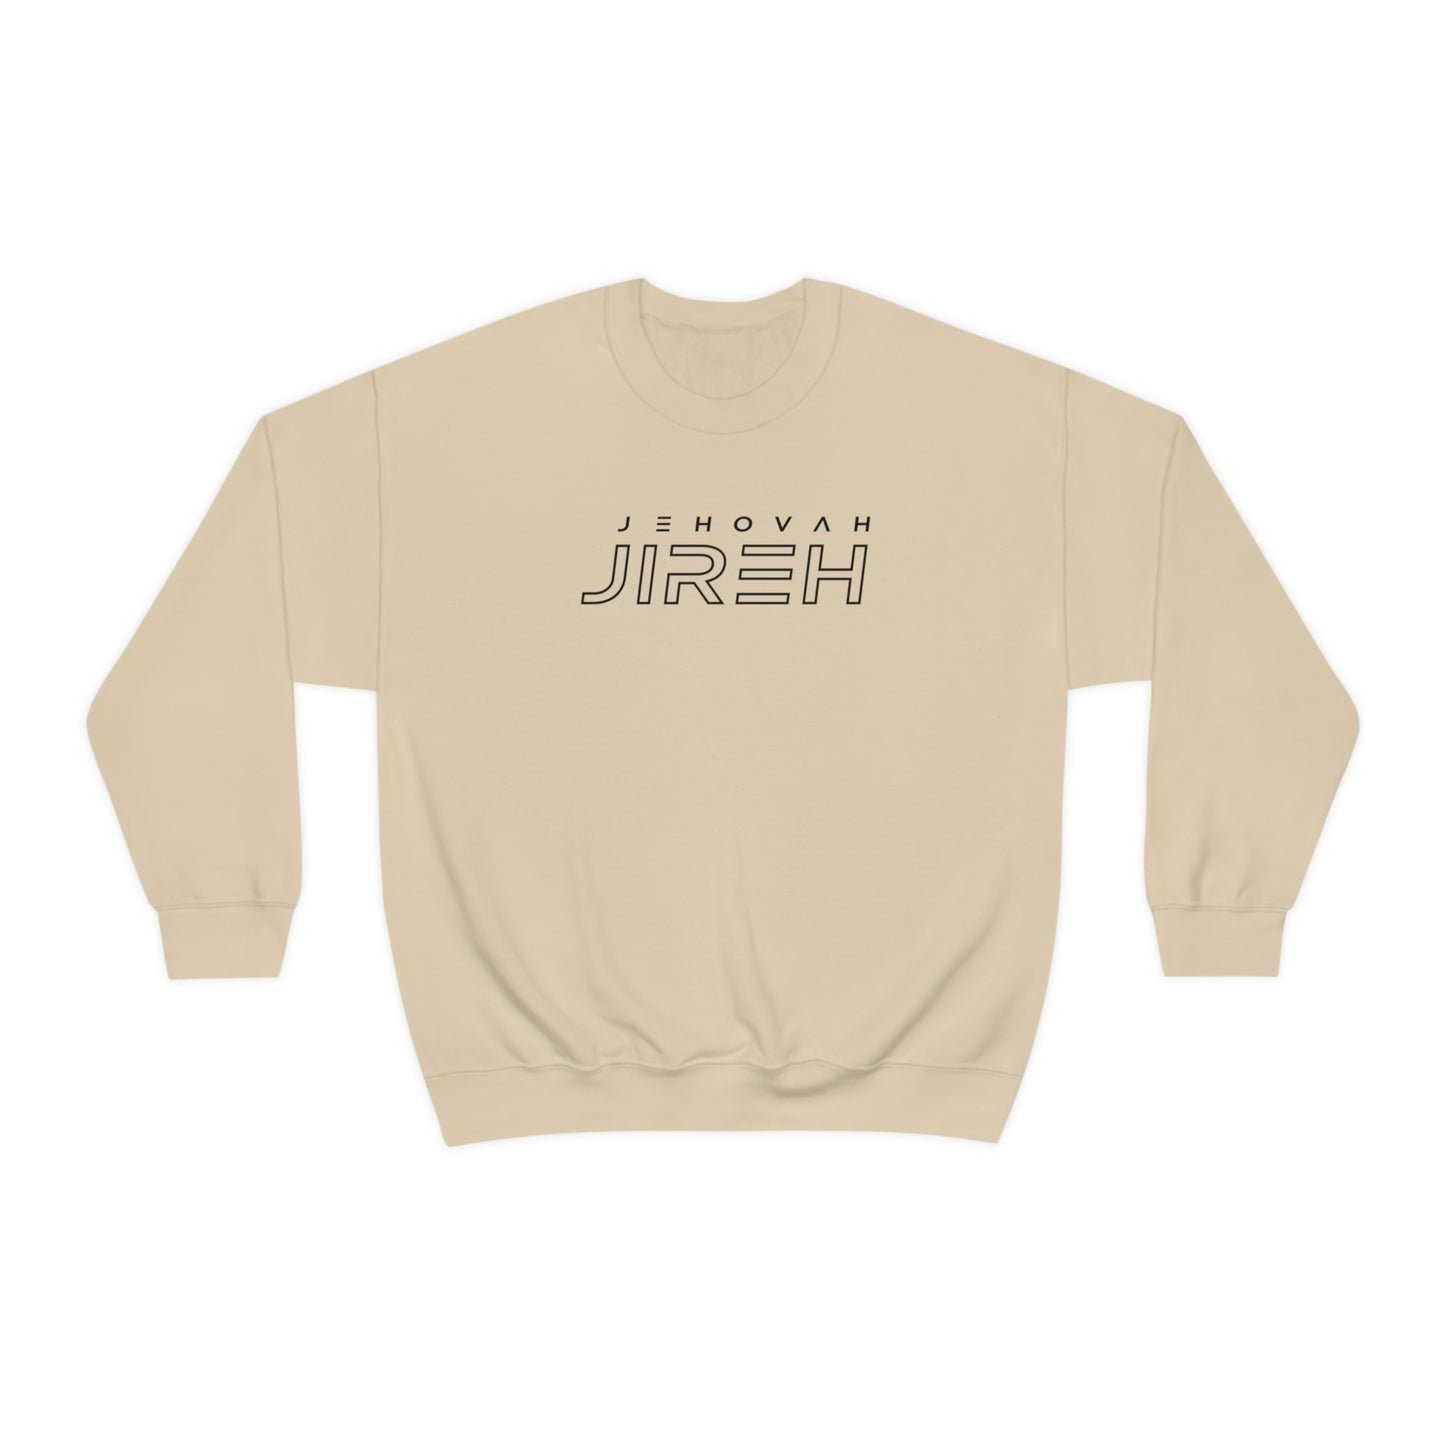 Jehovah Jireh Christian Sweatshirt For Women